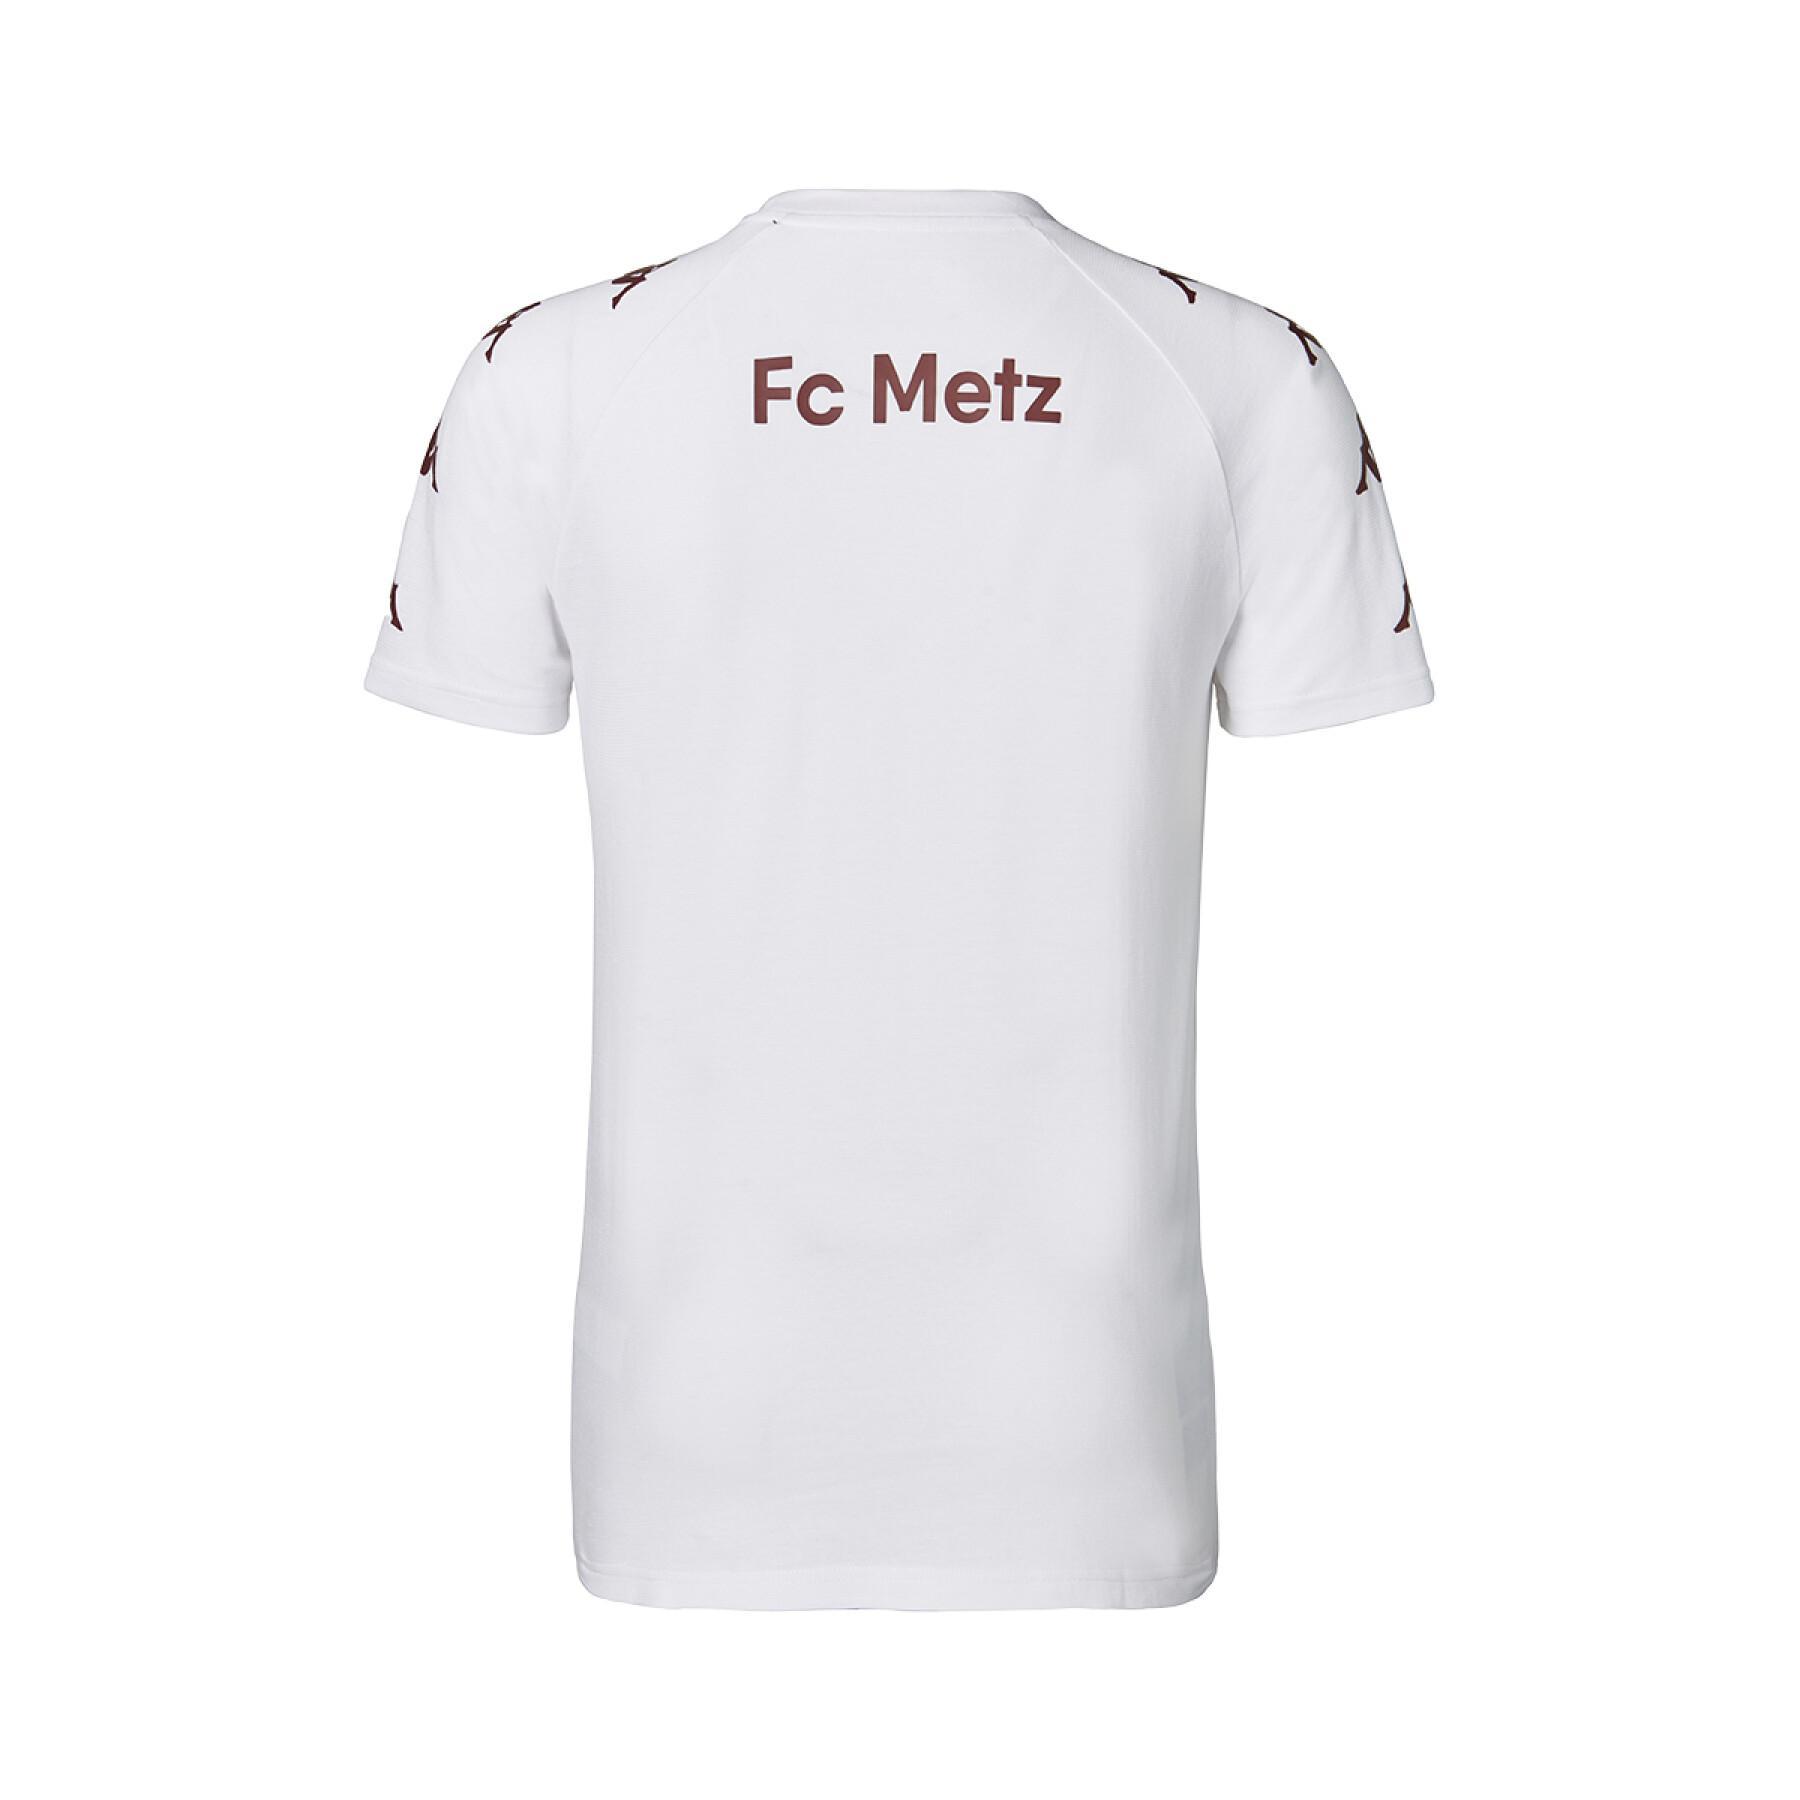 Camiseta niños FC Metz 2021/22 ancone